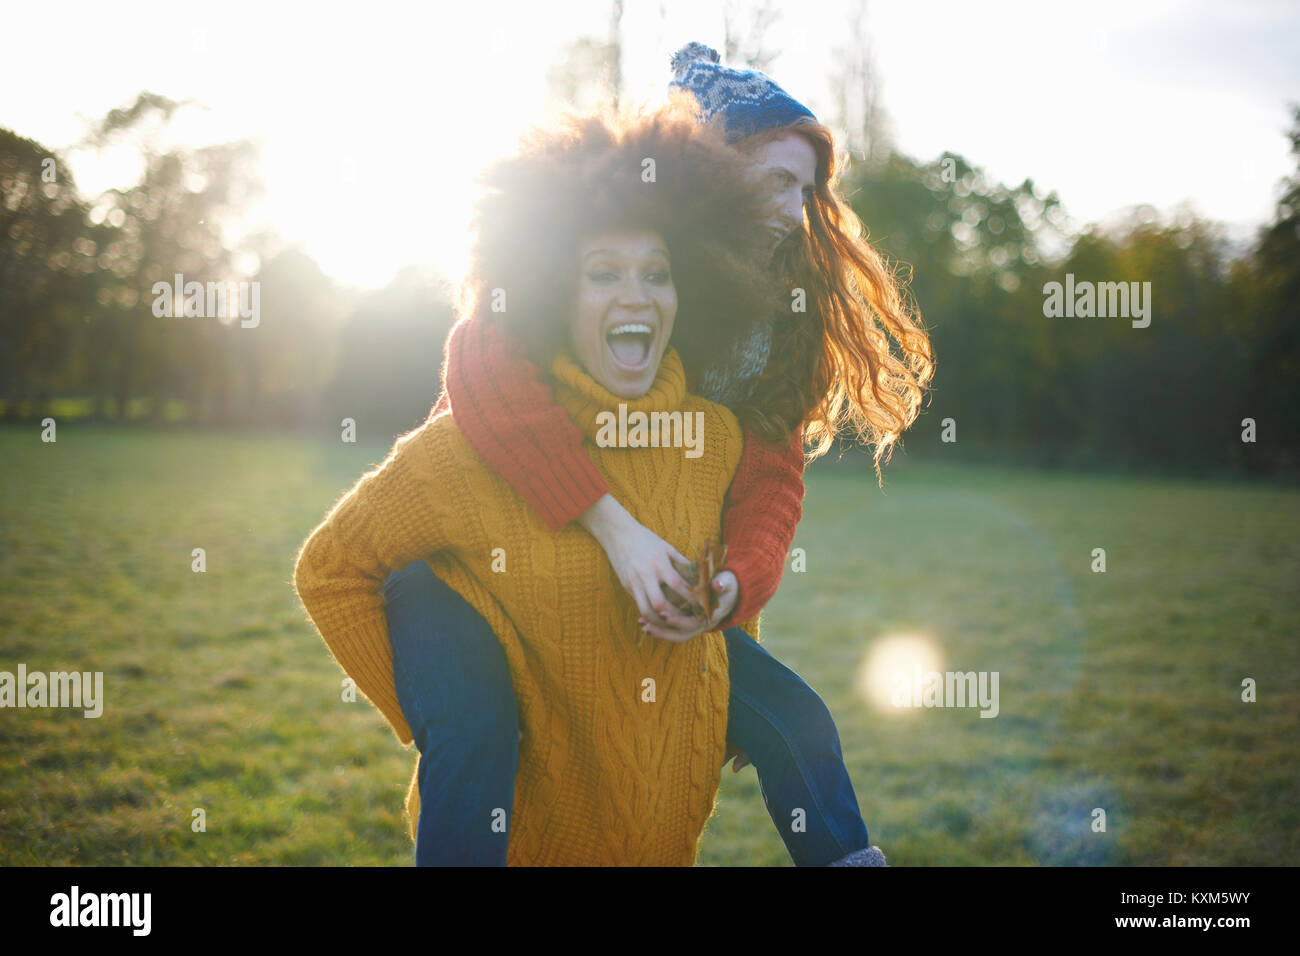 Deux jeunes femmes, en milieu rural, young woman giving ami piggyback ride Banque D'Images